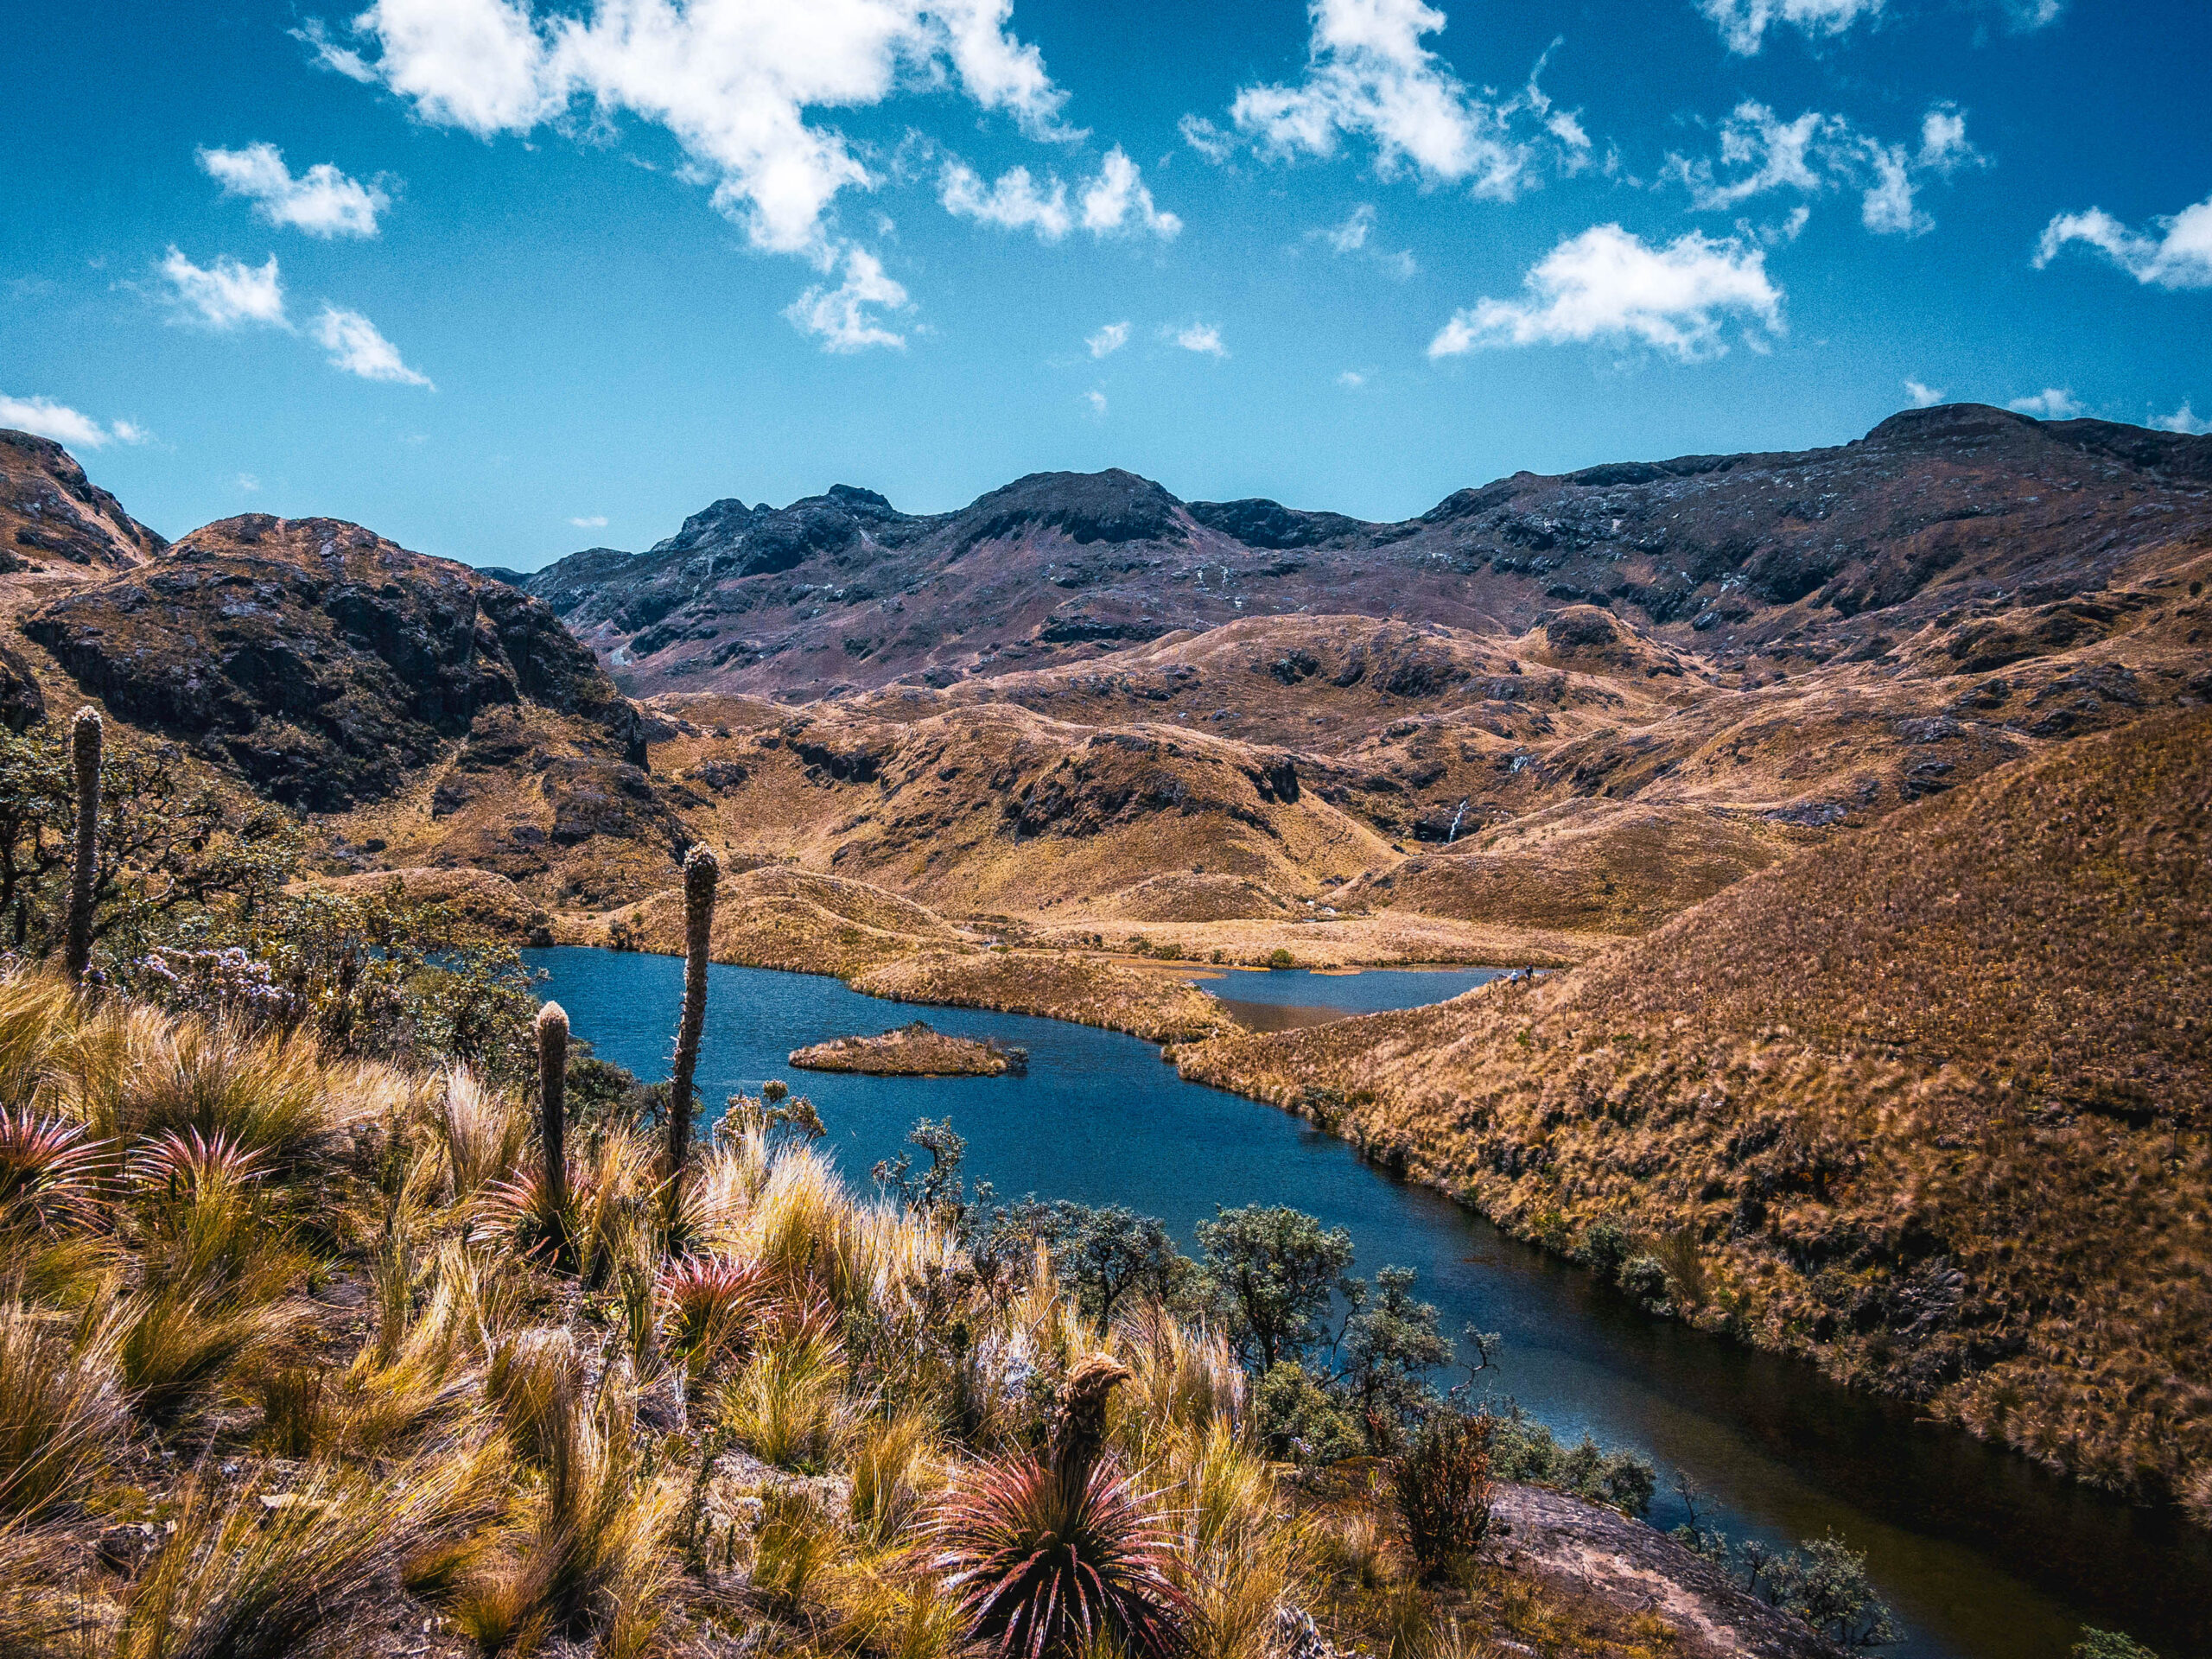 Cajas National Park in Ecuador